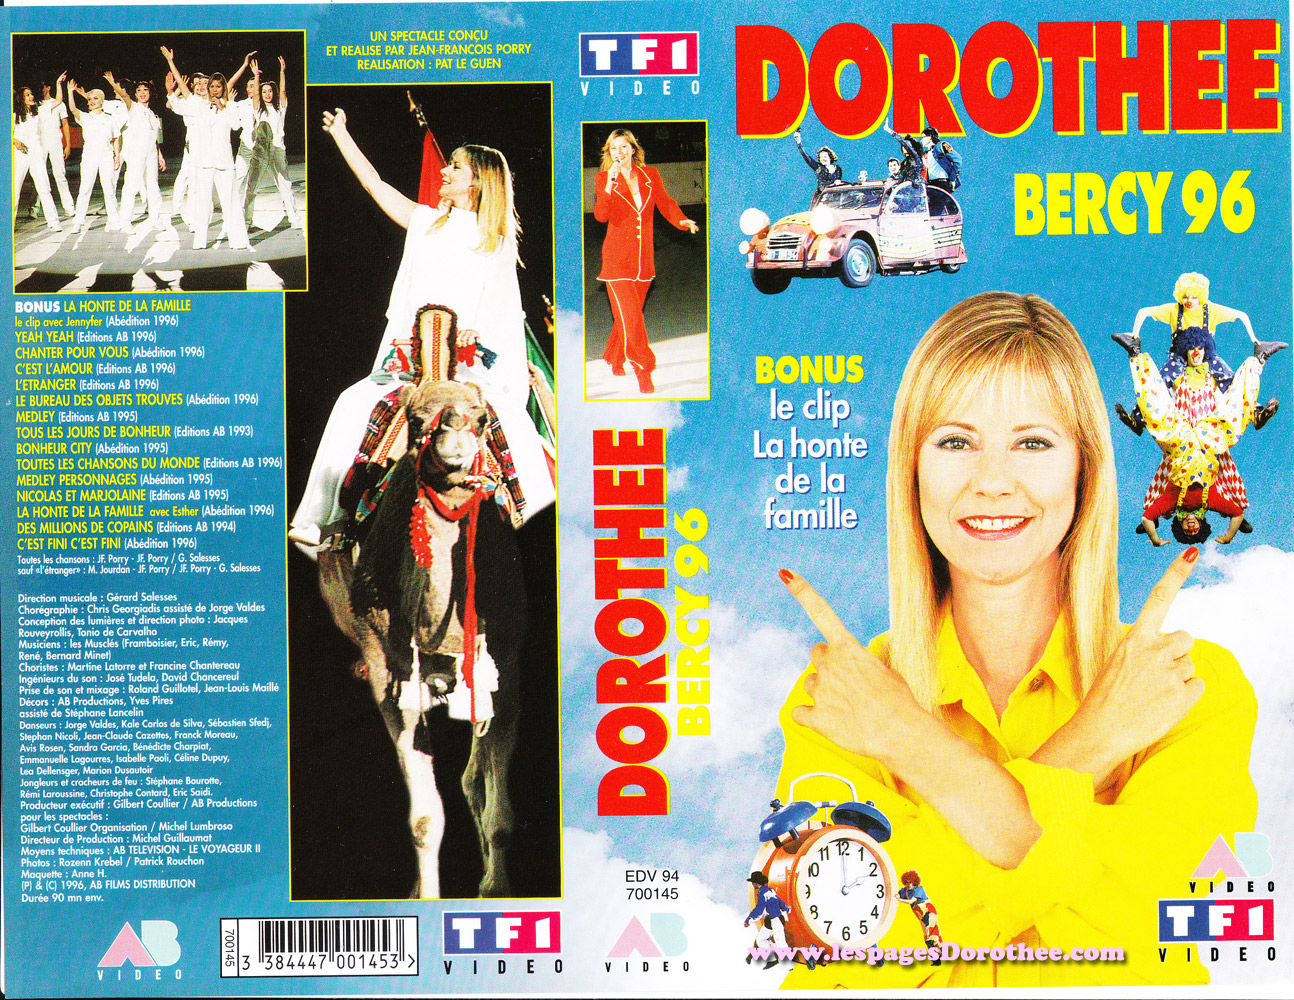 Dorothée Bercy 96